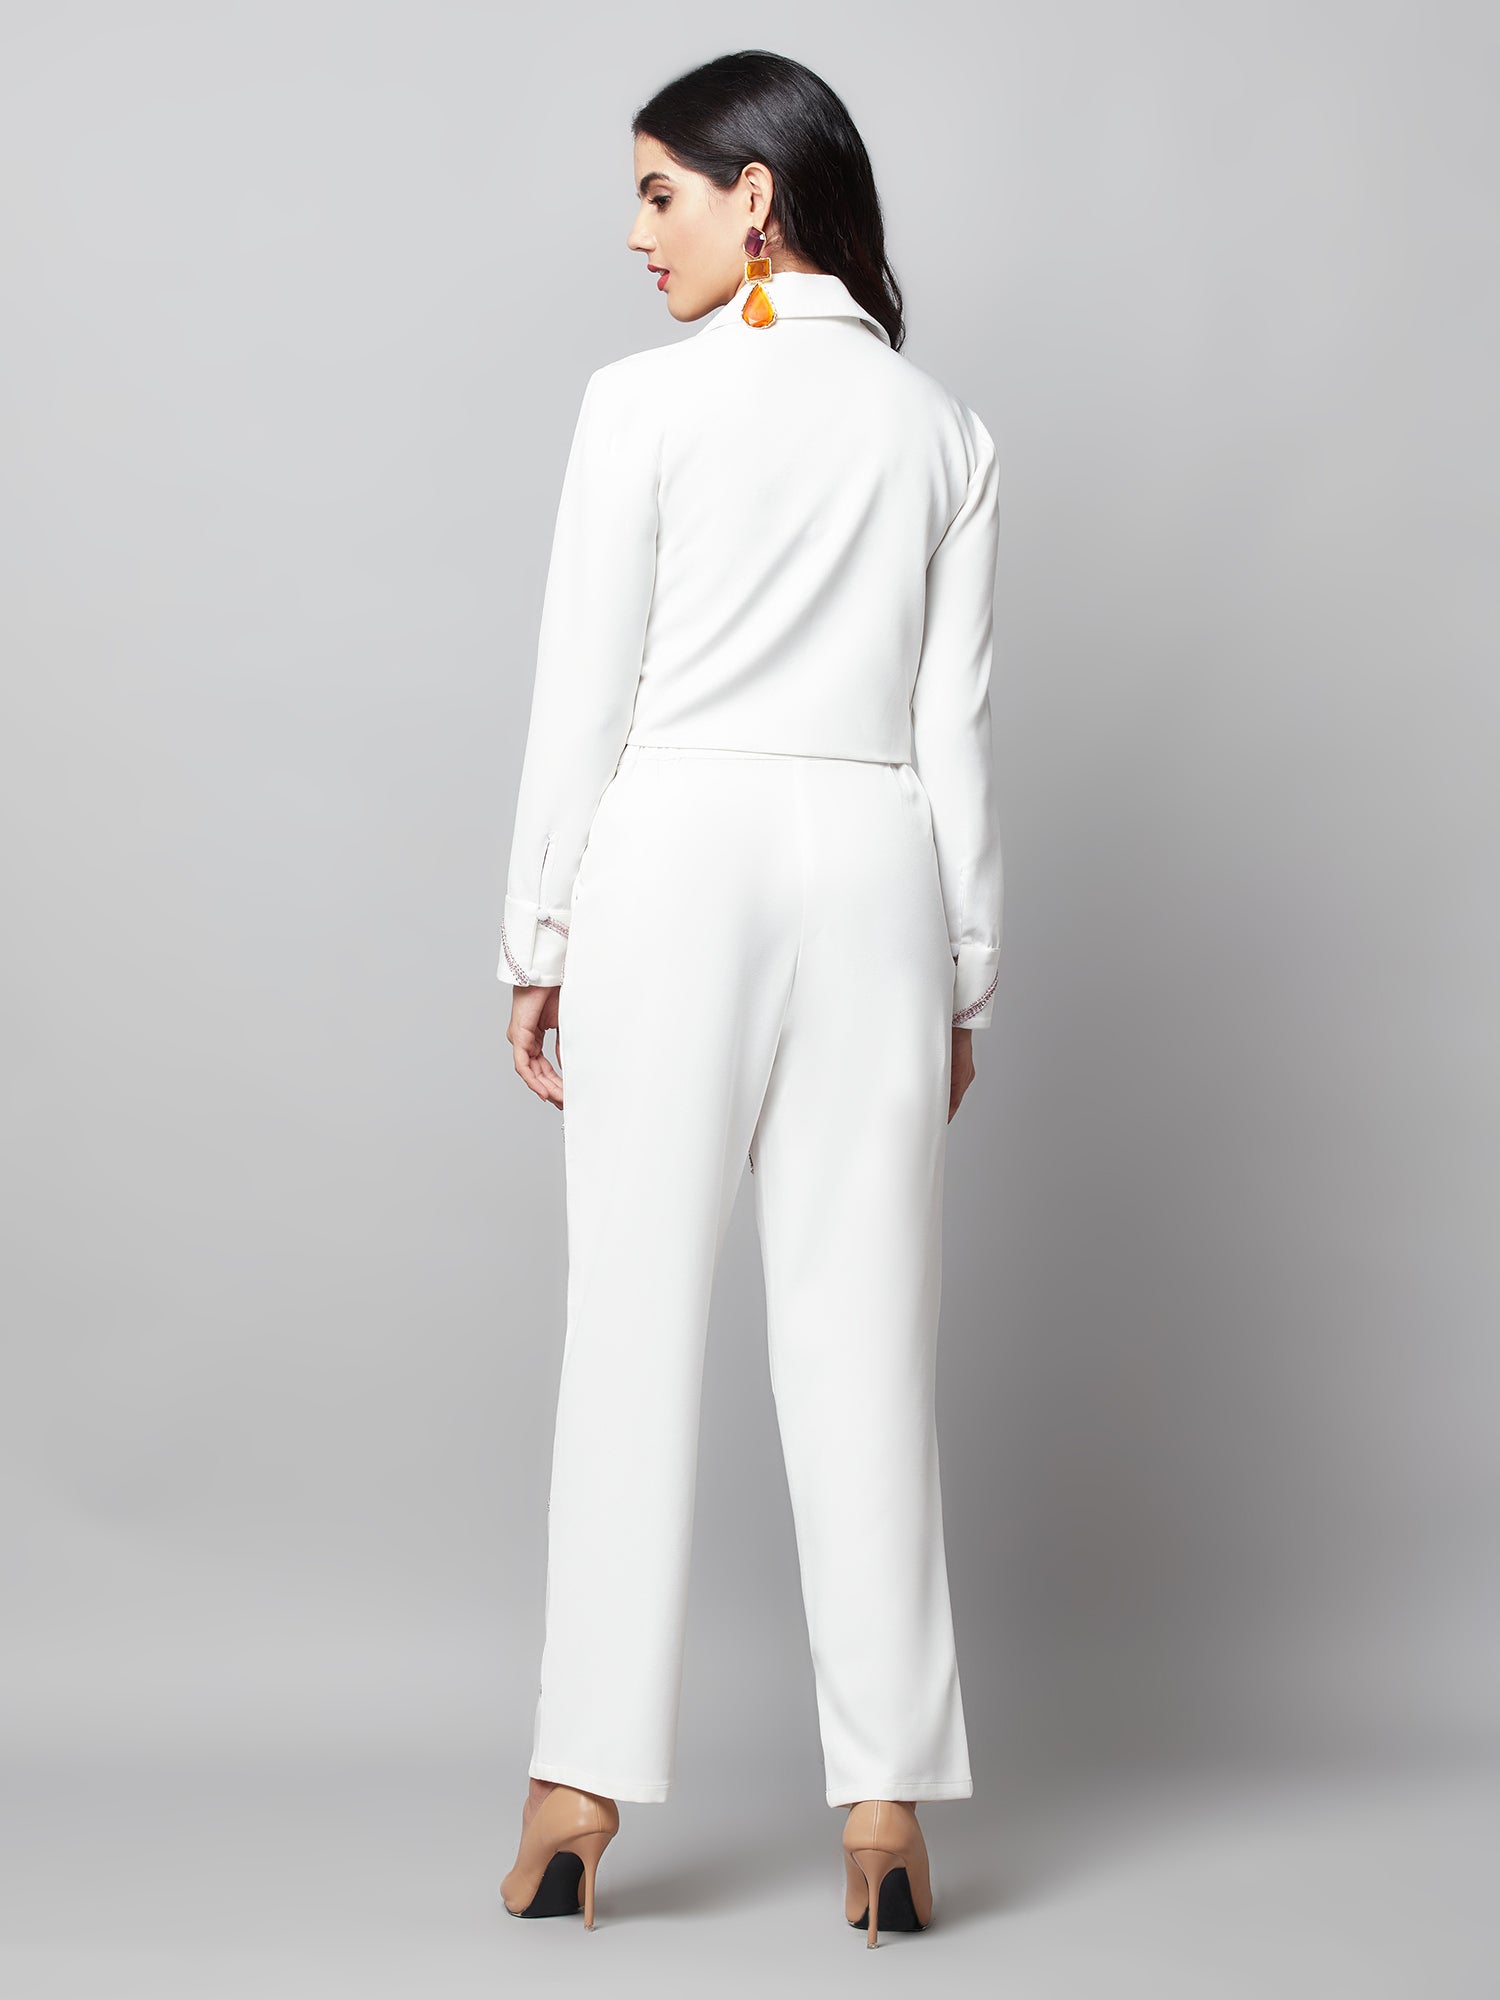 hand crafted white waistcoat